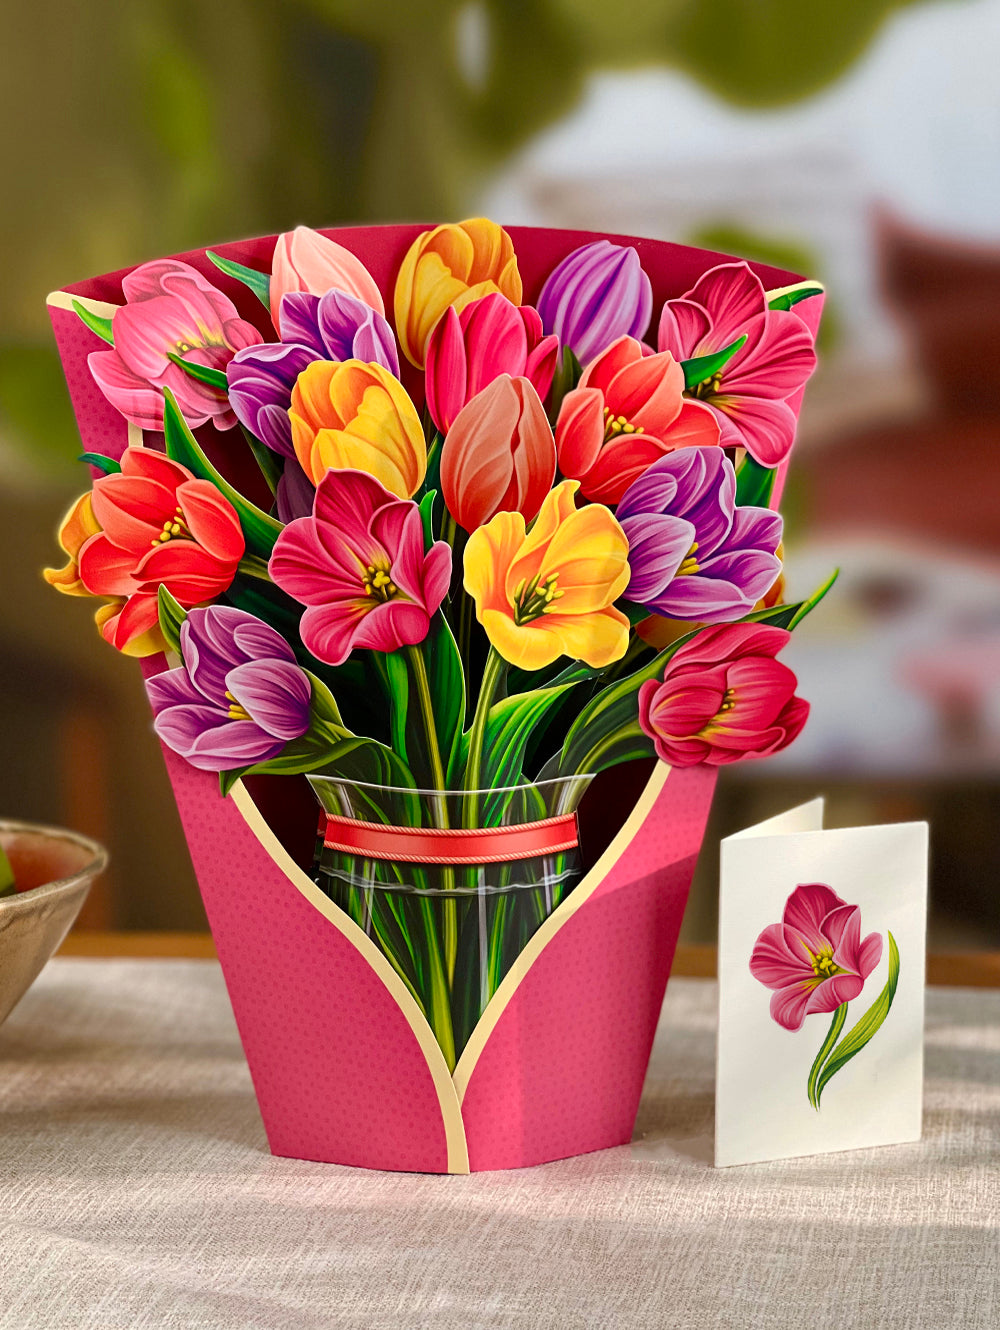 Pop Up Flower Bouquet Greeting Card - Festive Tulips